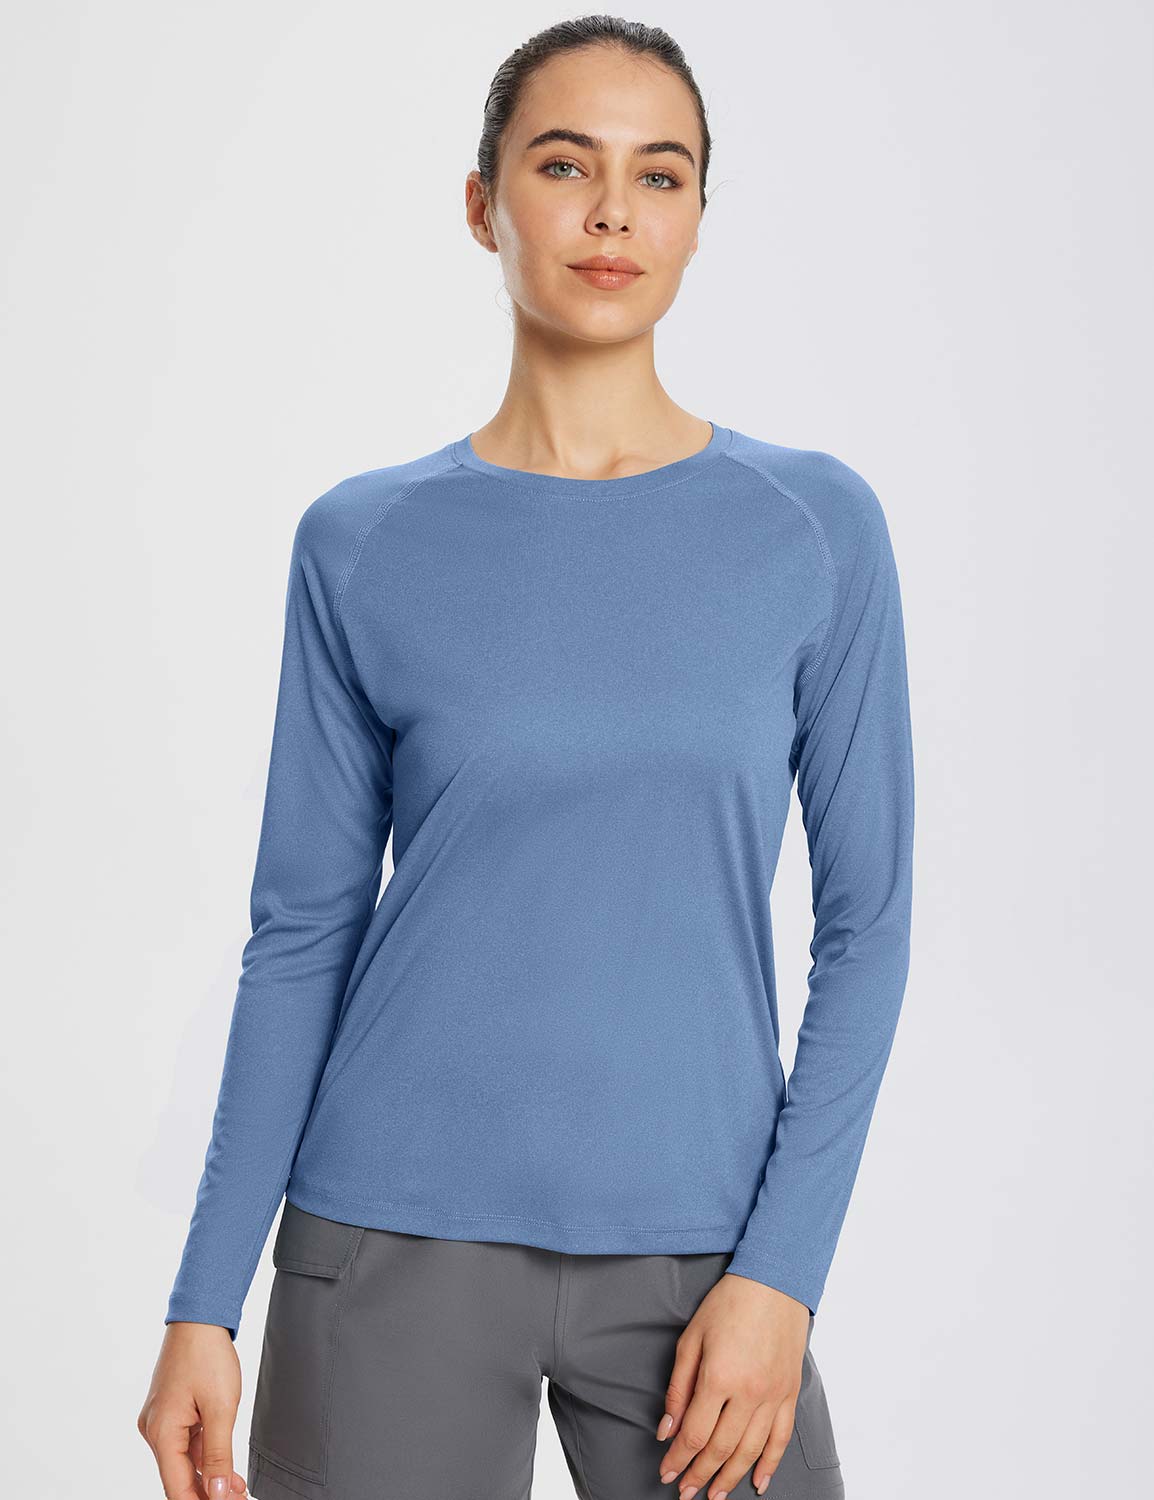 G4Free Women Long Sleeve UV Shirts Quick Dry Moisture Wicking Hiking Shirts  Workout Tops for Women 1# Peacock Blue Medium